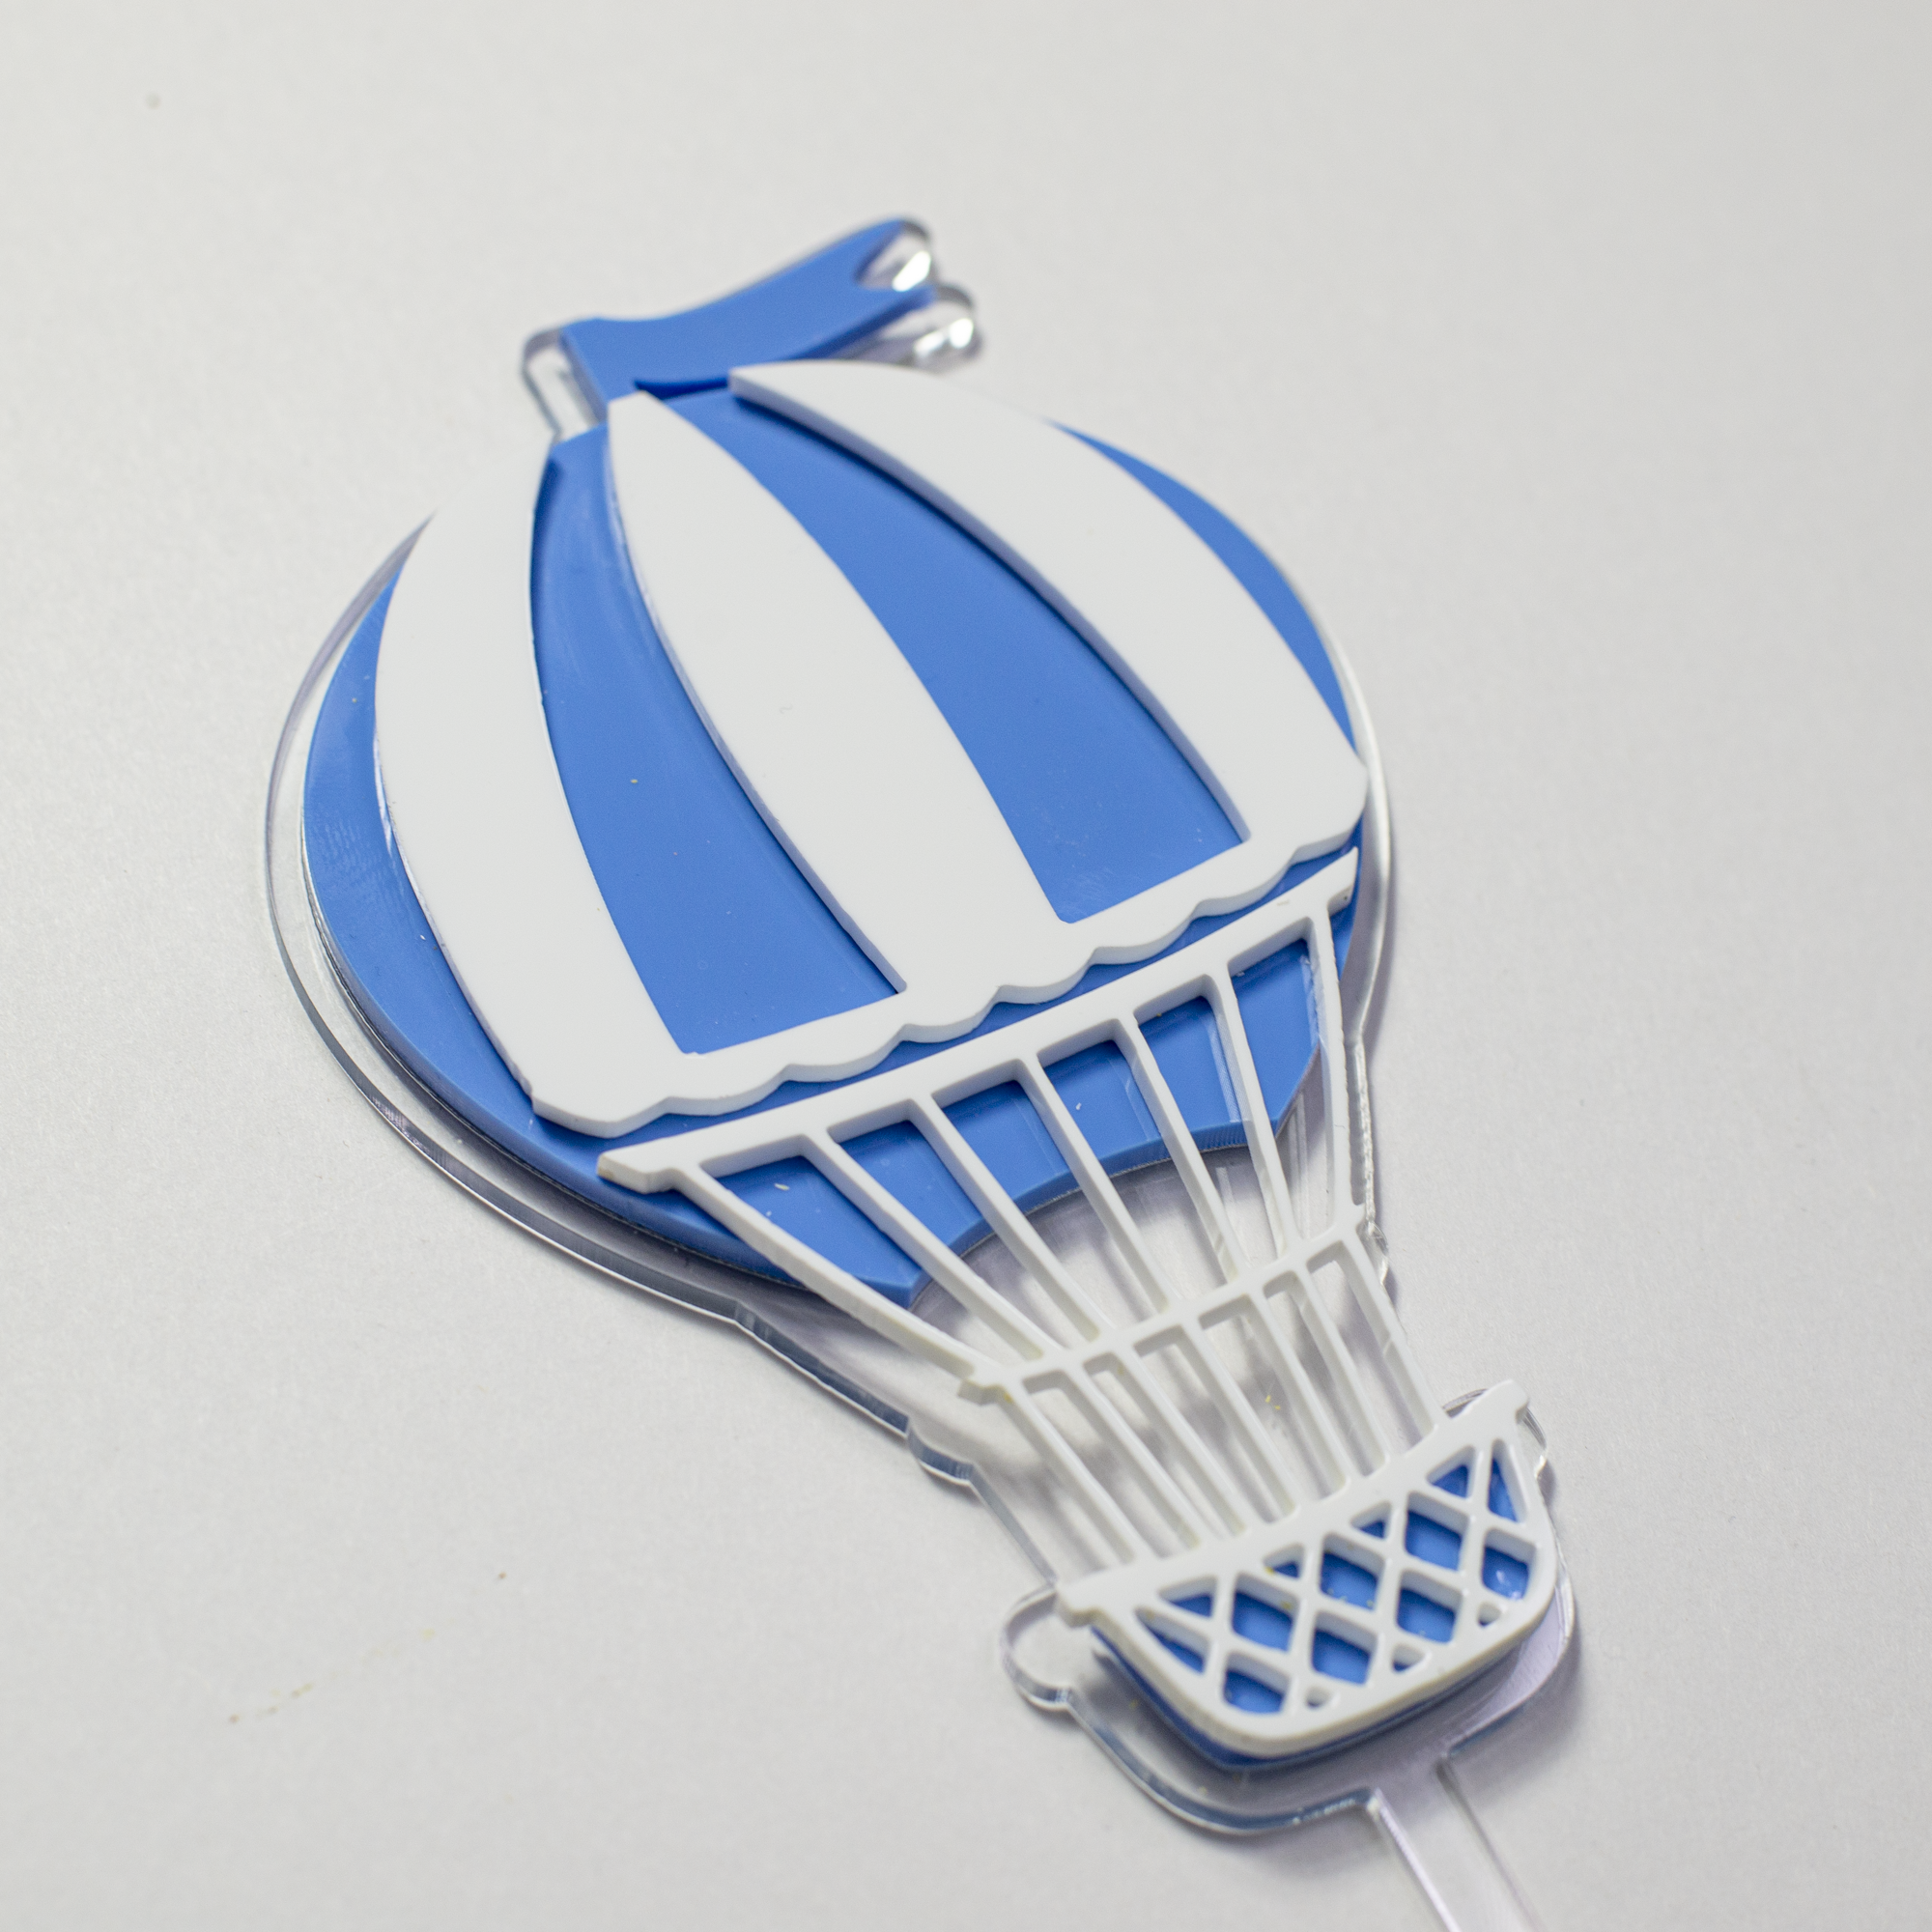 Hot Air Balloon Cake Topper and Mini Balloon Charms